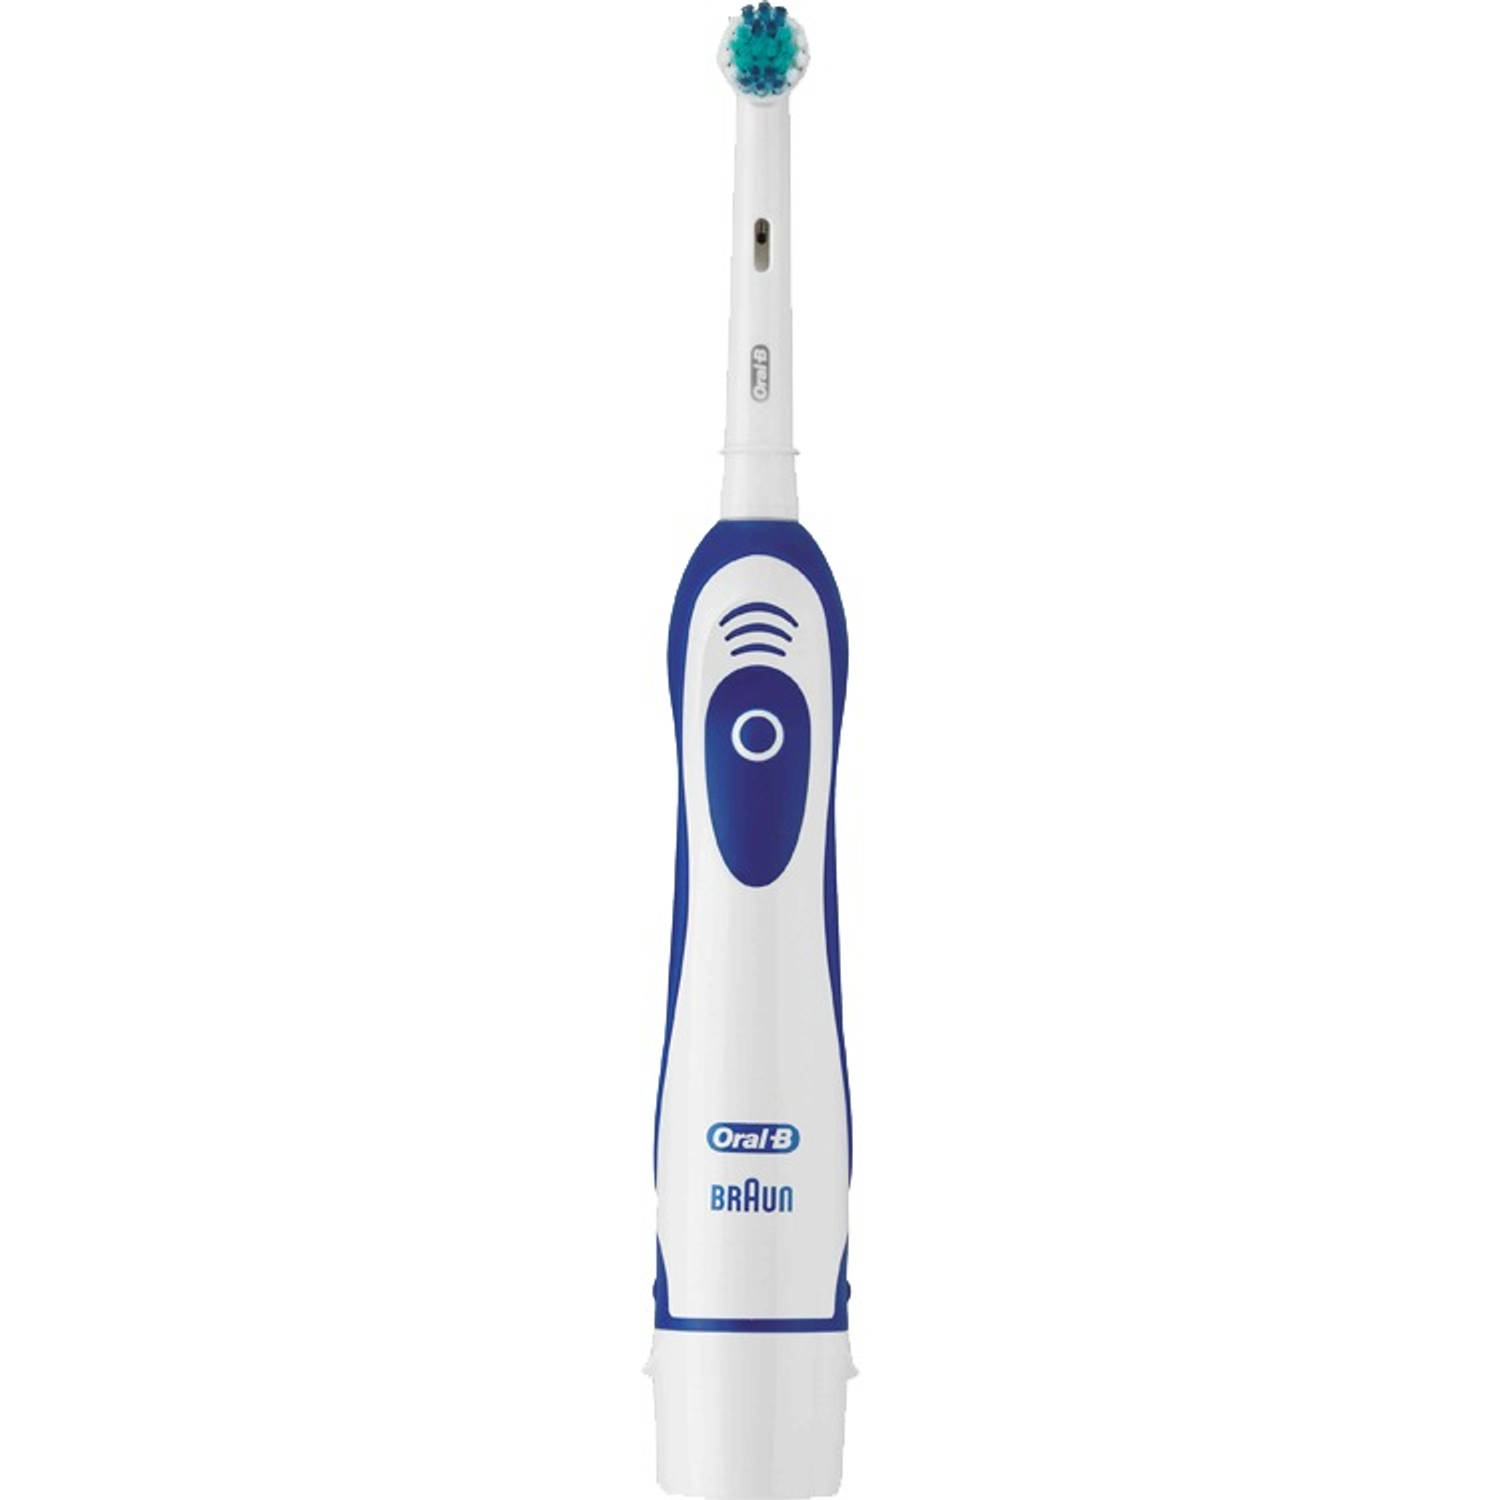 Oral-B elektrische tandenborstel Power wit | Blokker